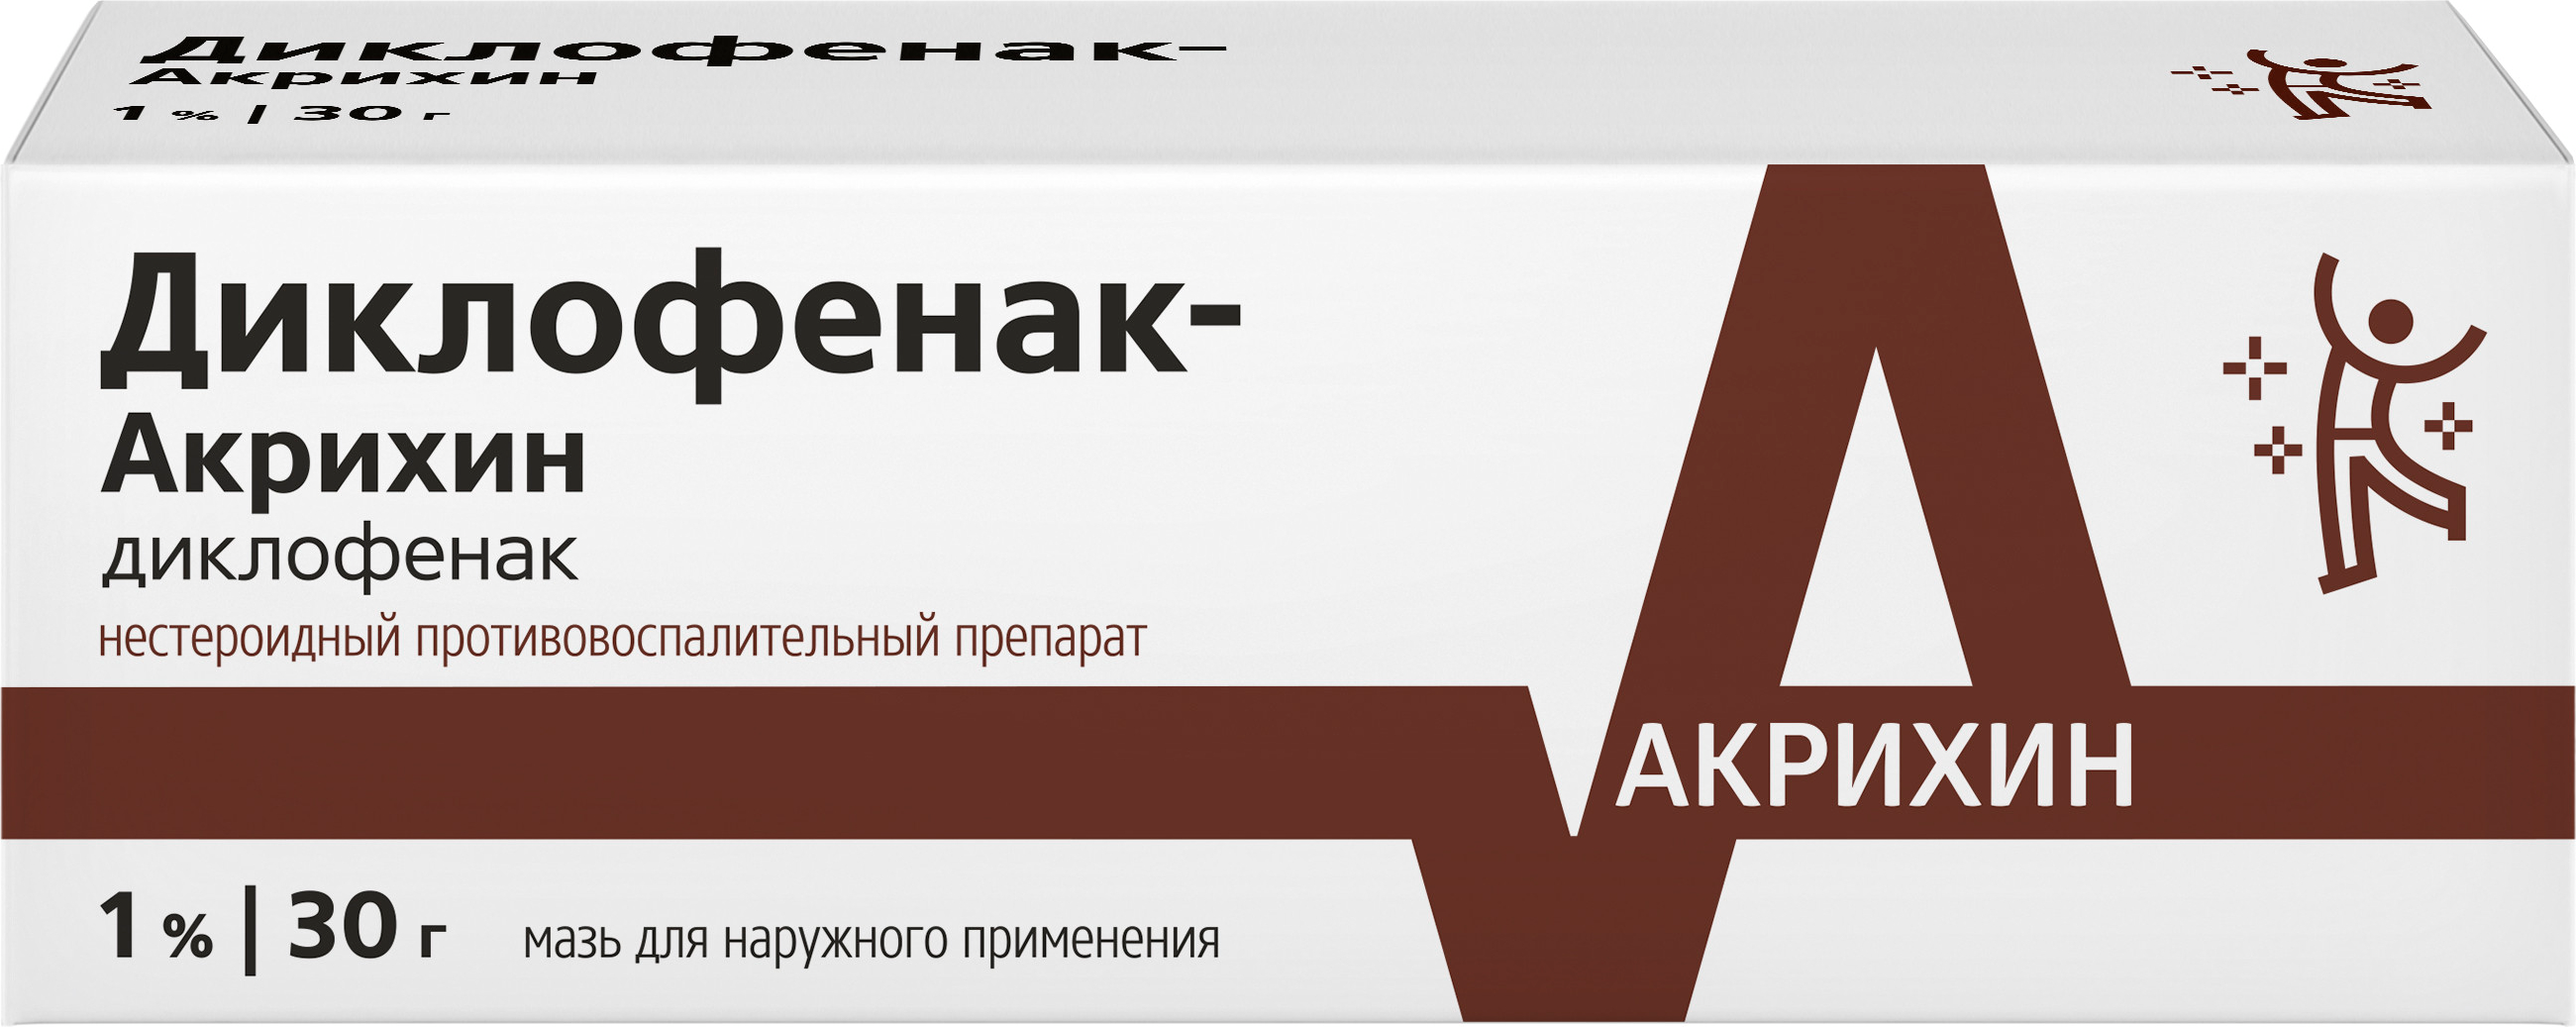 диклофенак ретард акрихин таб 100мг 20 Диклофенак-Акрихин, мазь 1%, 30 г